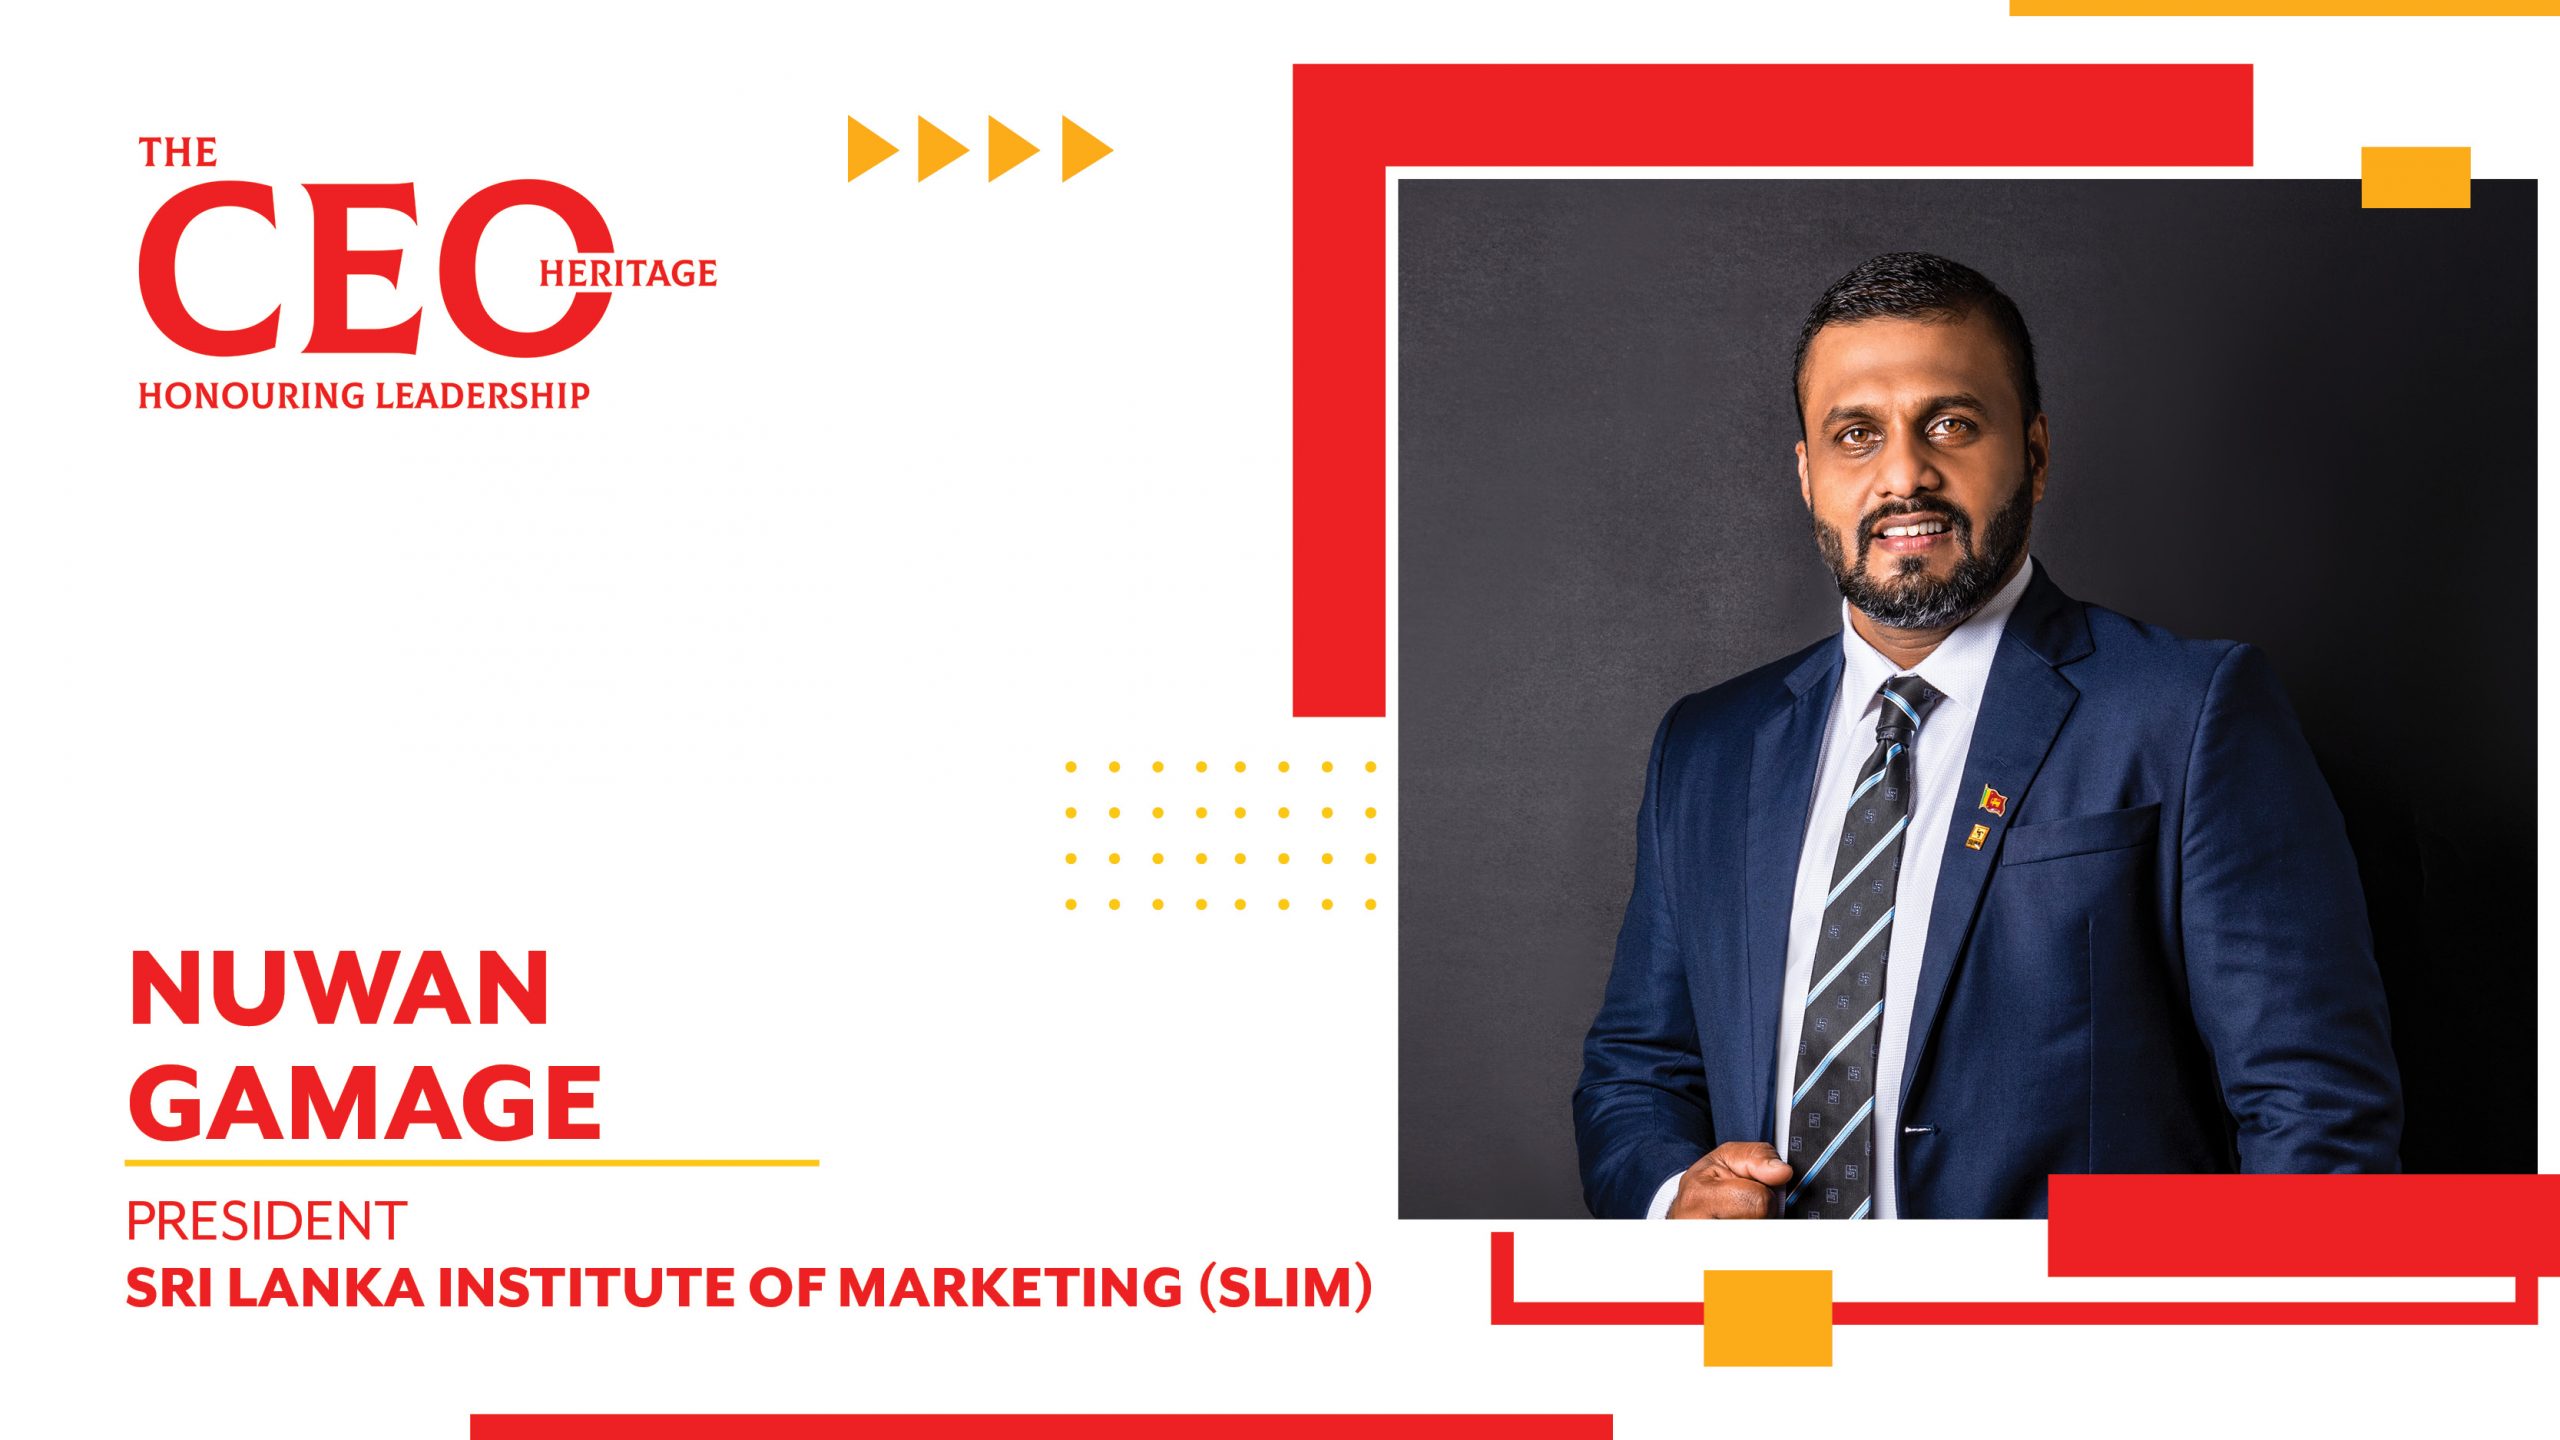 Expounding on the Contemporary Benefits of Marketing – President of Sri Lanka Institute of Marketing (SLIM), Nuwan Gamage